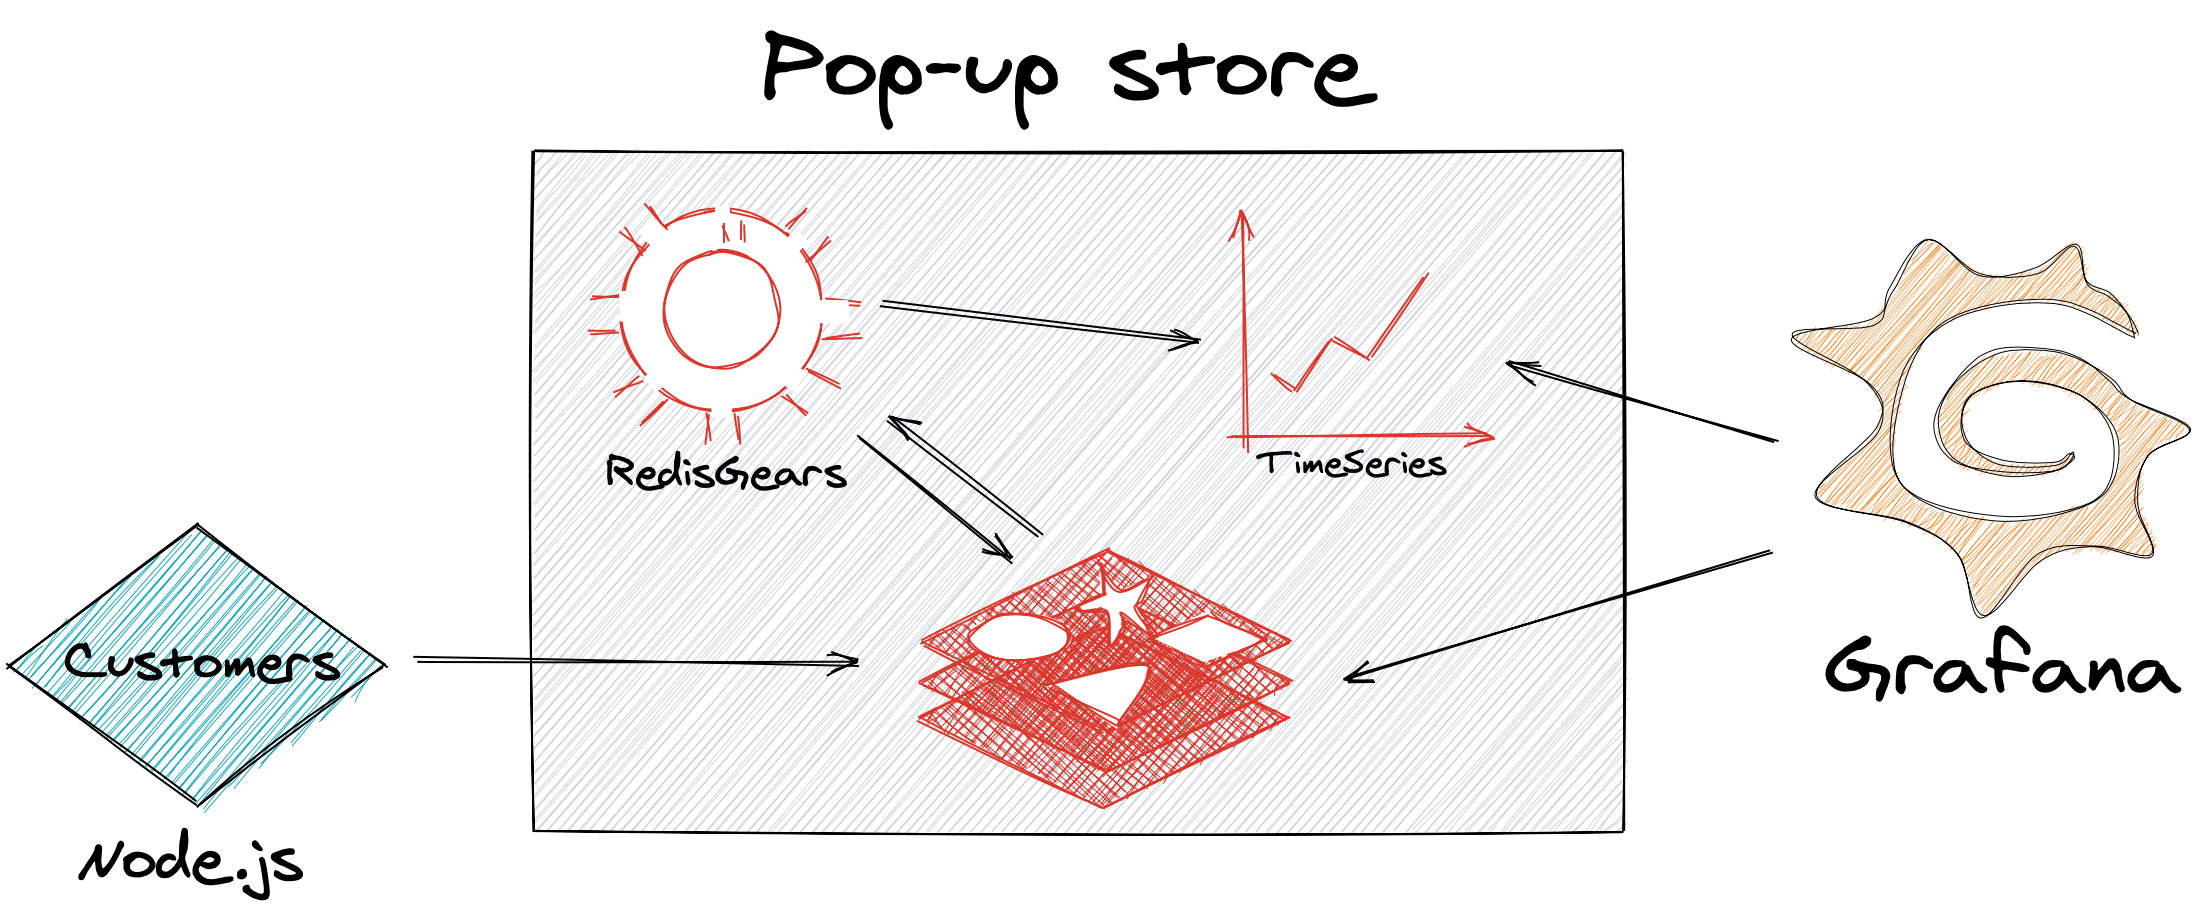 Redis Pop-up store